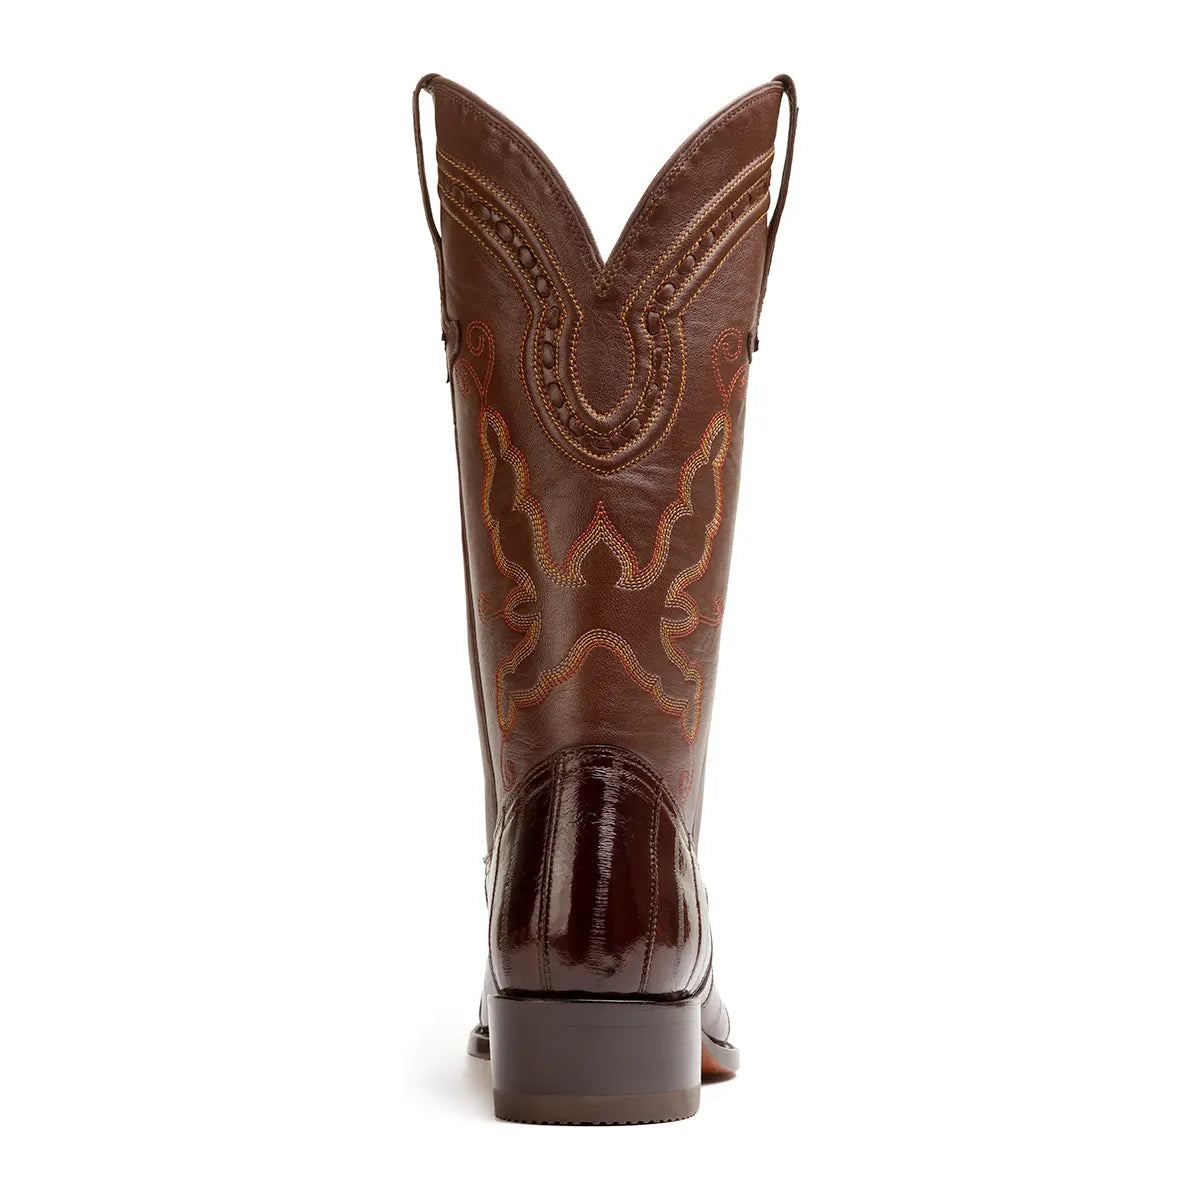 Patricio Eel Skin Classic Western Boots -Brown